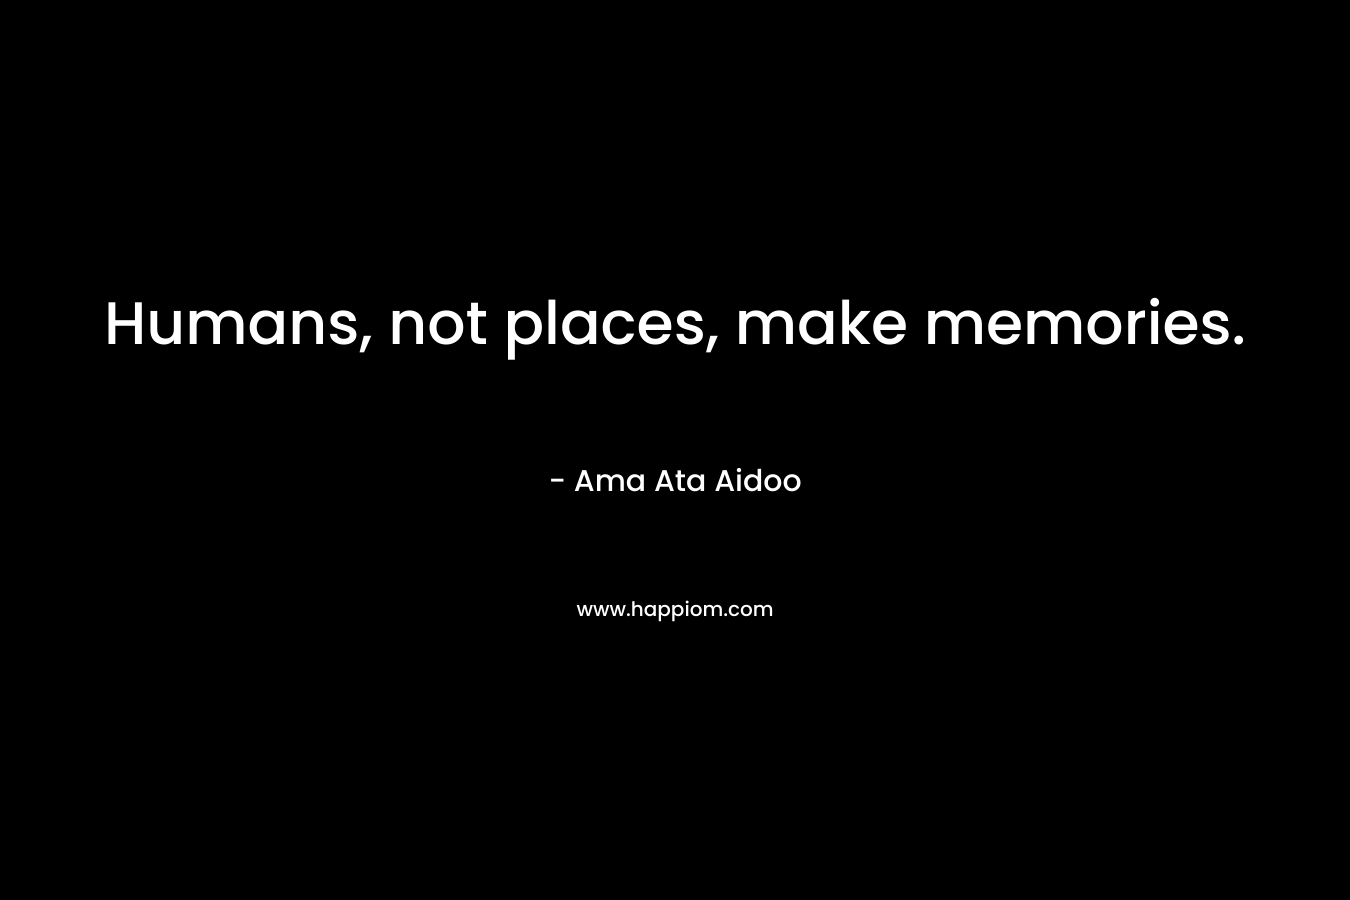 Humans, not places, make memories. – Ama Ata Aidoo